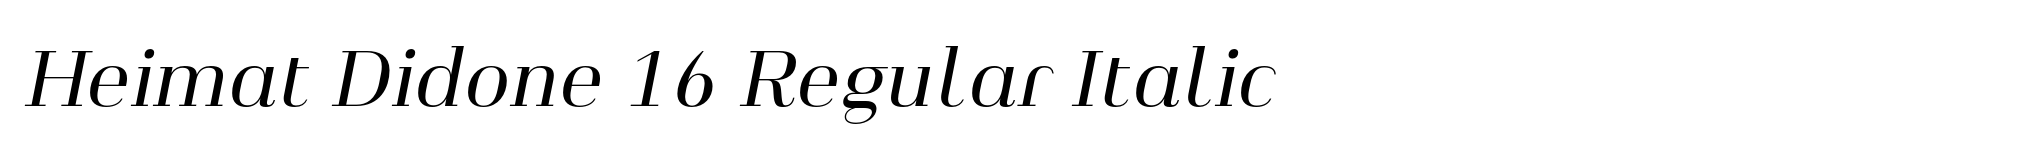 Heimat Didone 16 Regular Italic image